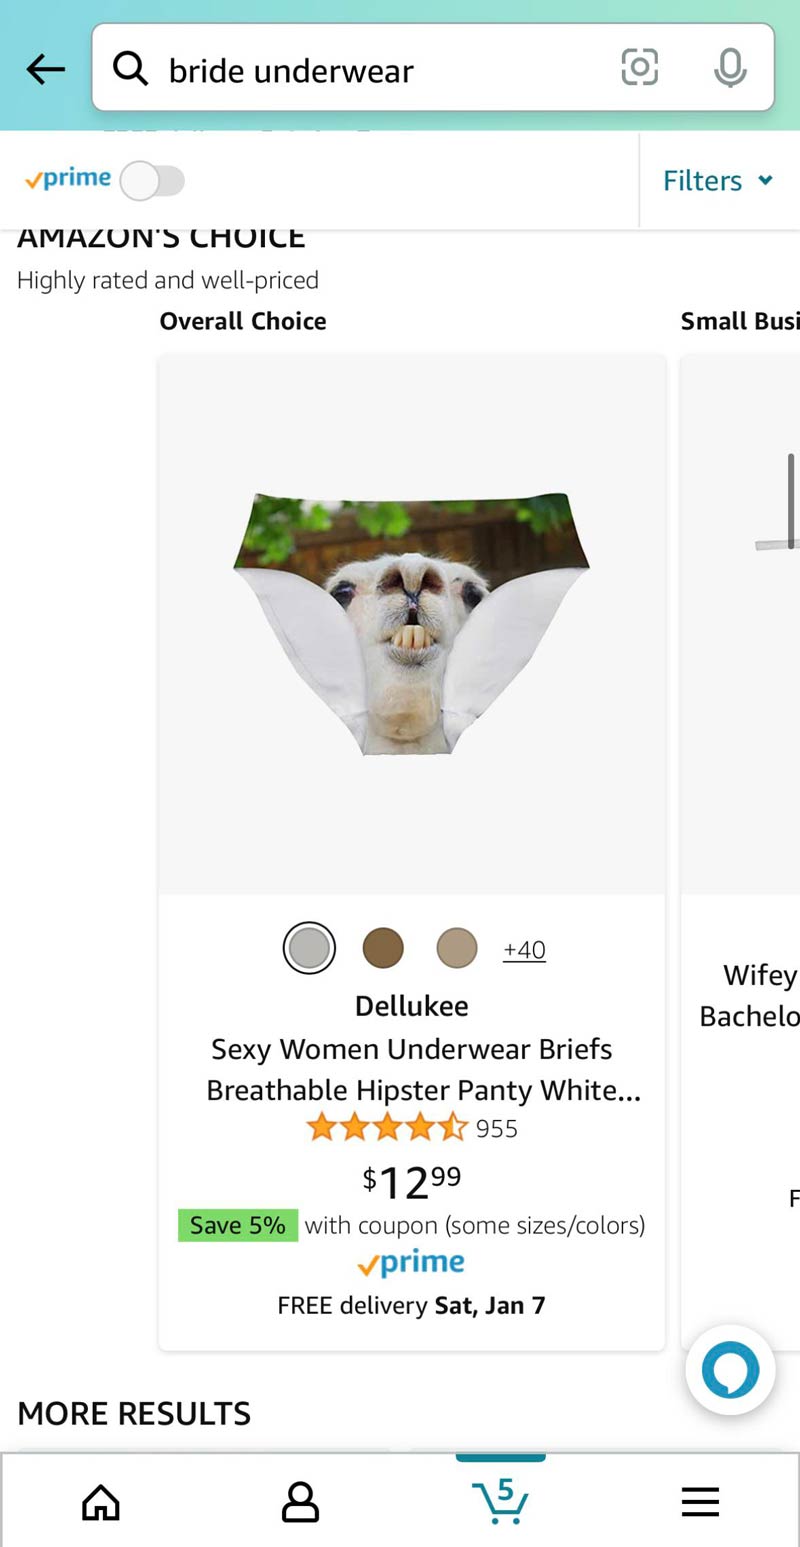 Popular search result for “bridal underwear”